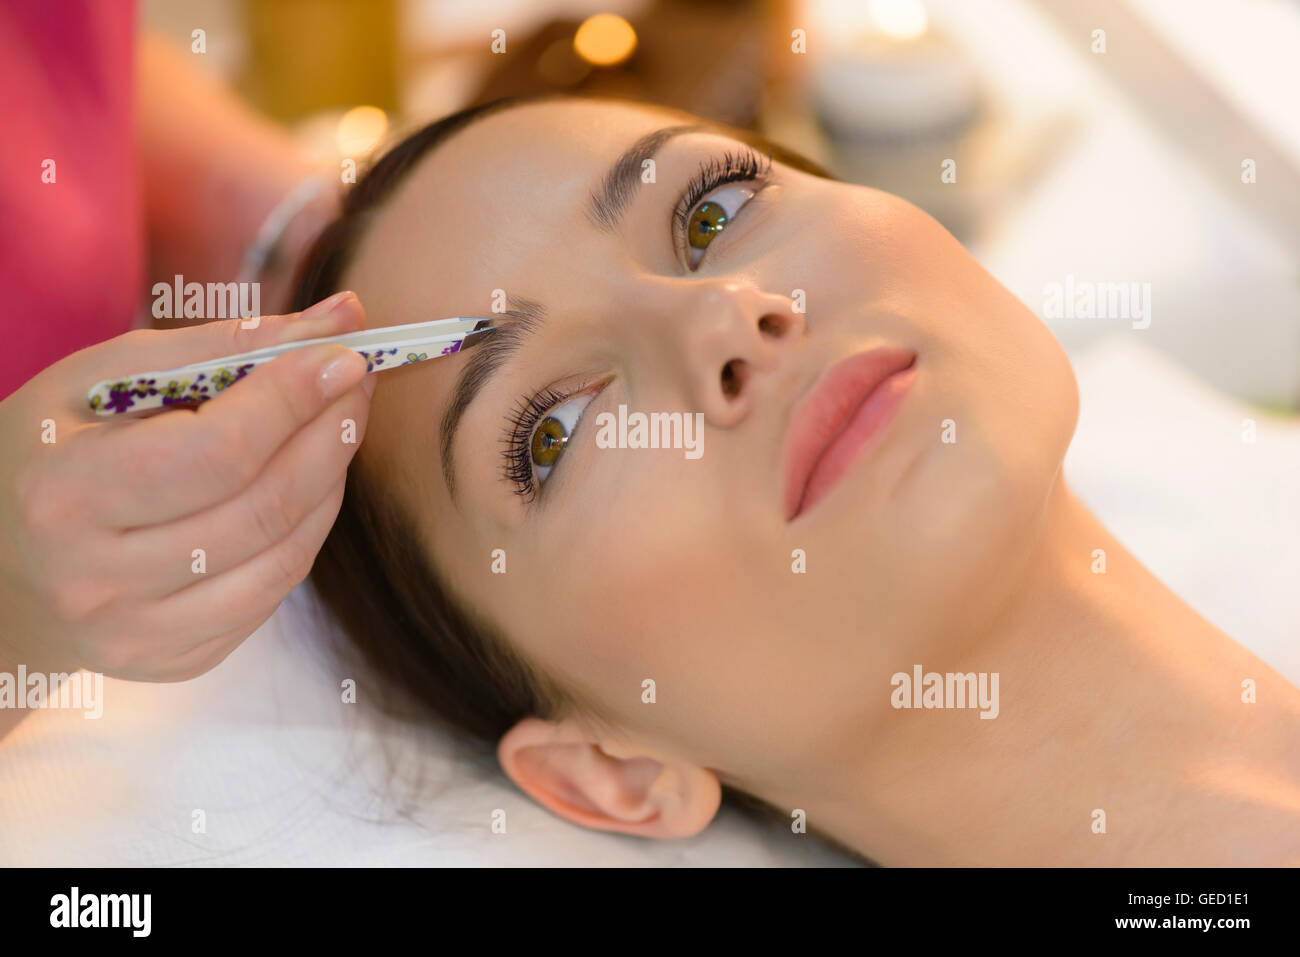 Attractive woman getting tweezing procedure at beauty salon Stock Photo